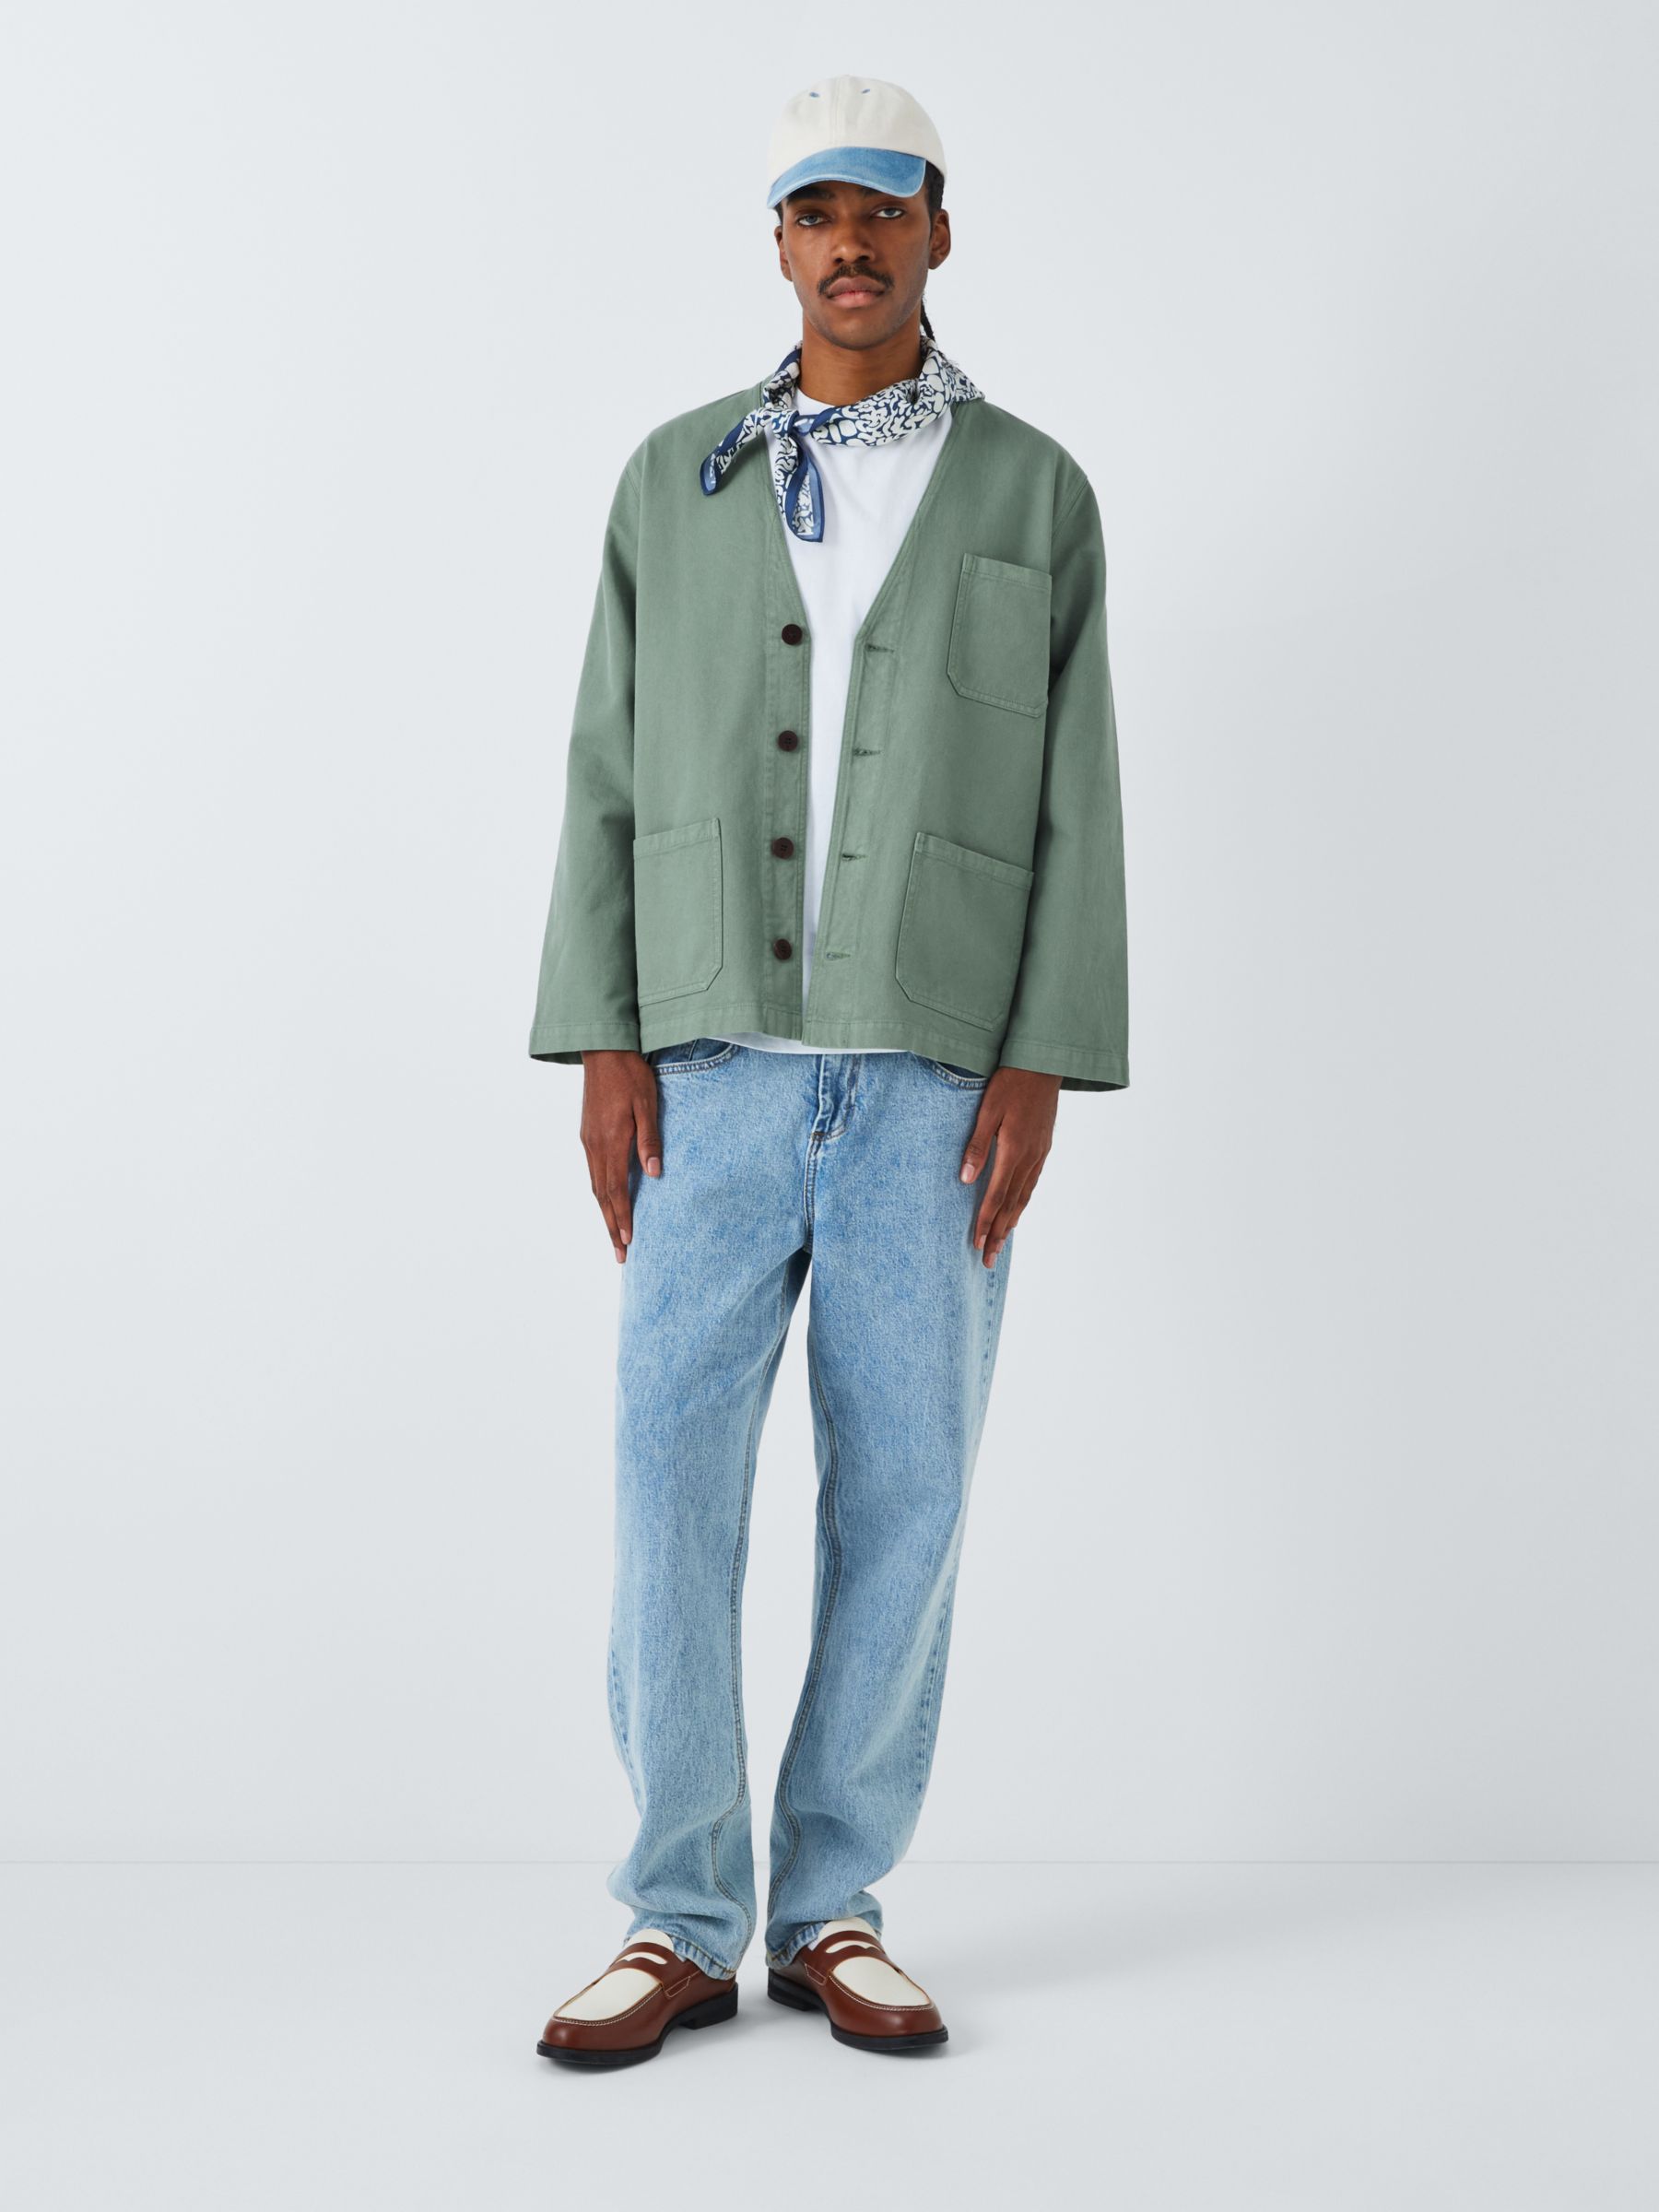 La Paz Cotton V-Neck Worker Jacket, Green Bay Canvas, XL